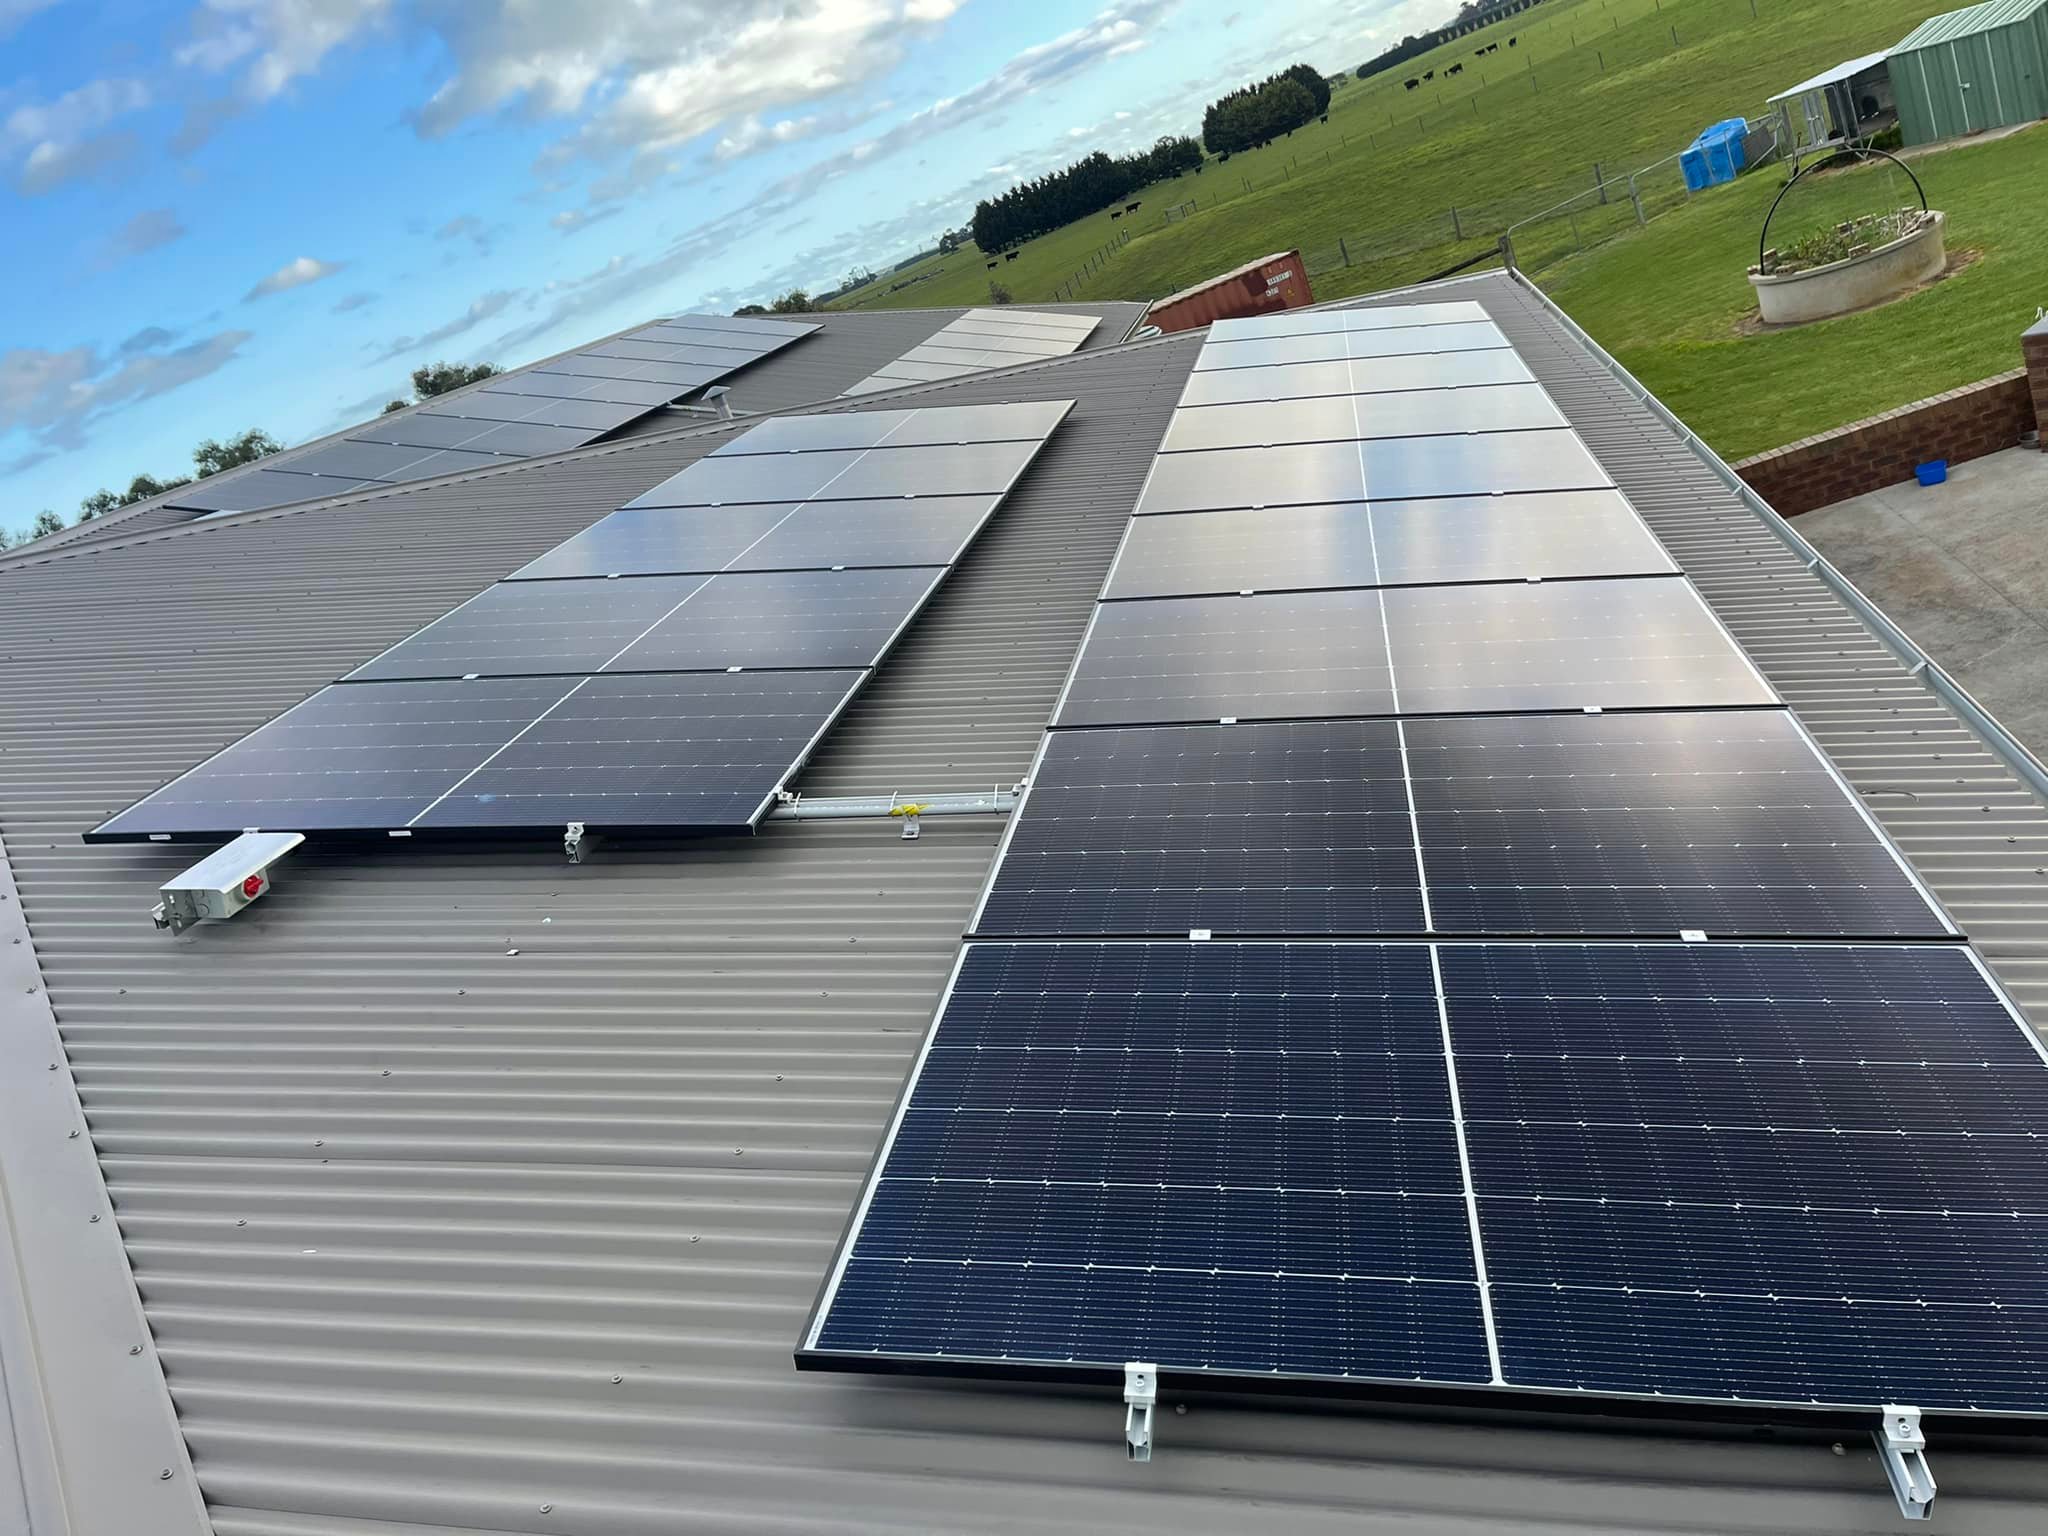 united energy group Vic - Solar panel installation